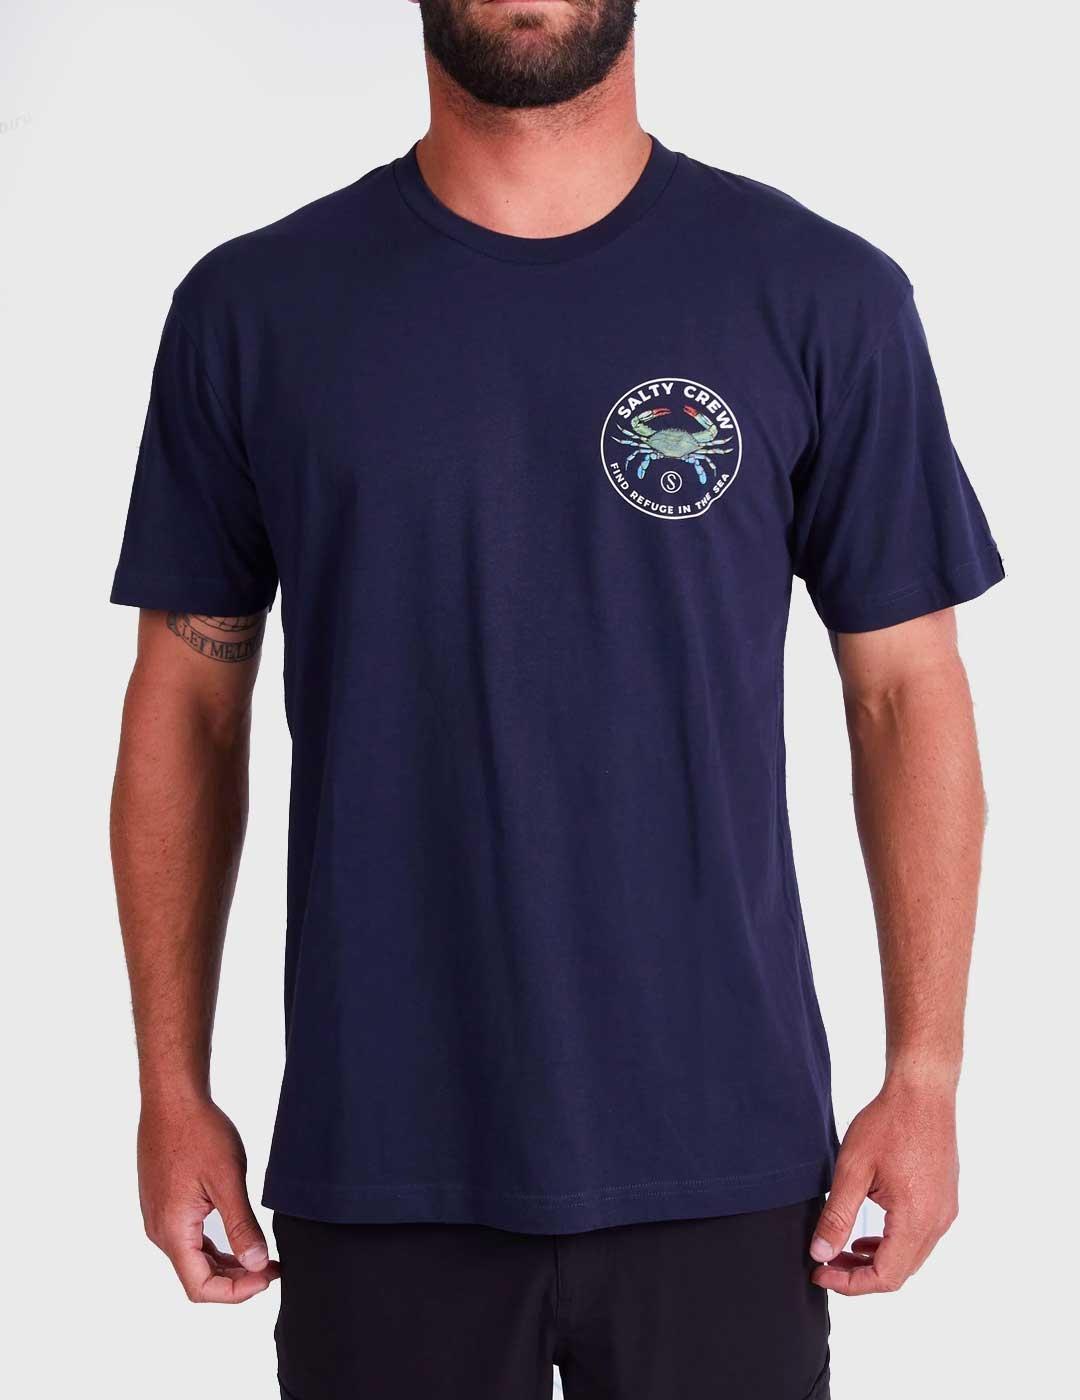 Camiseta Salty Crew Blue Crabber marino para hombre